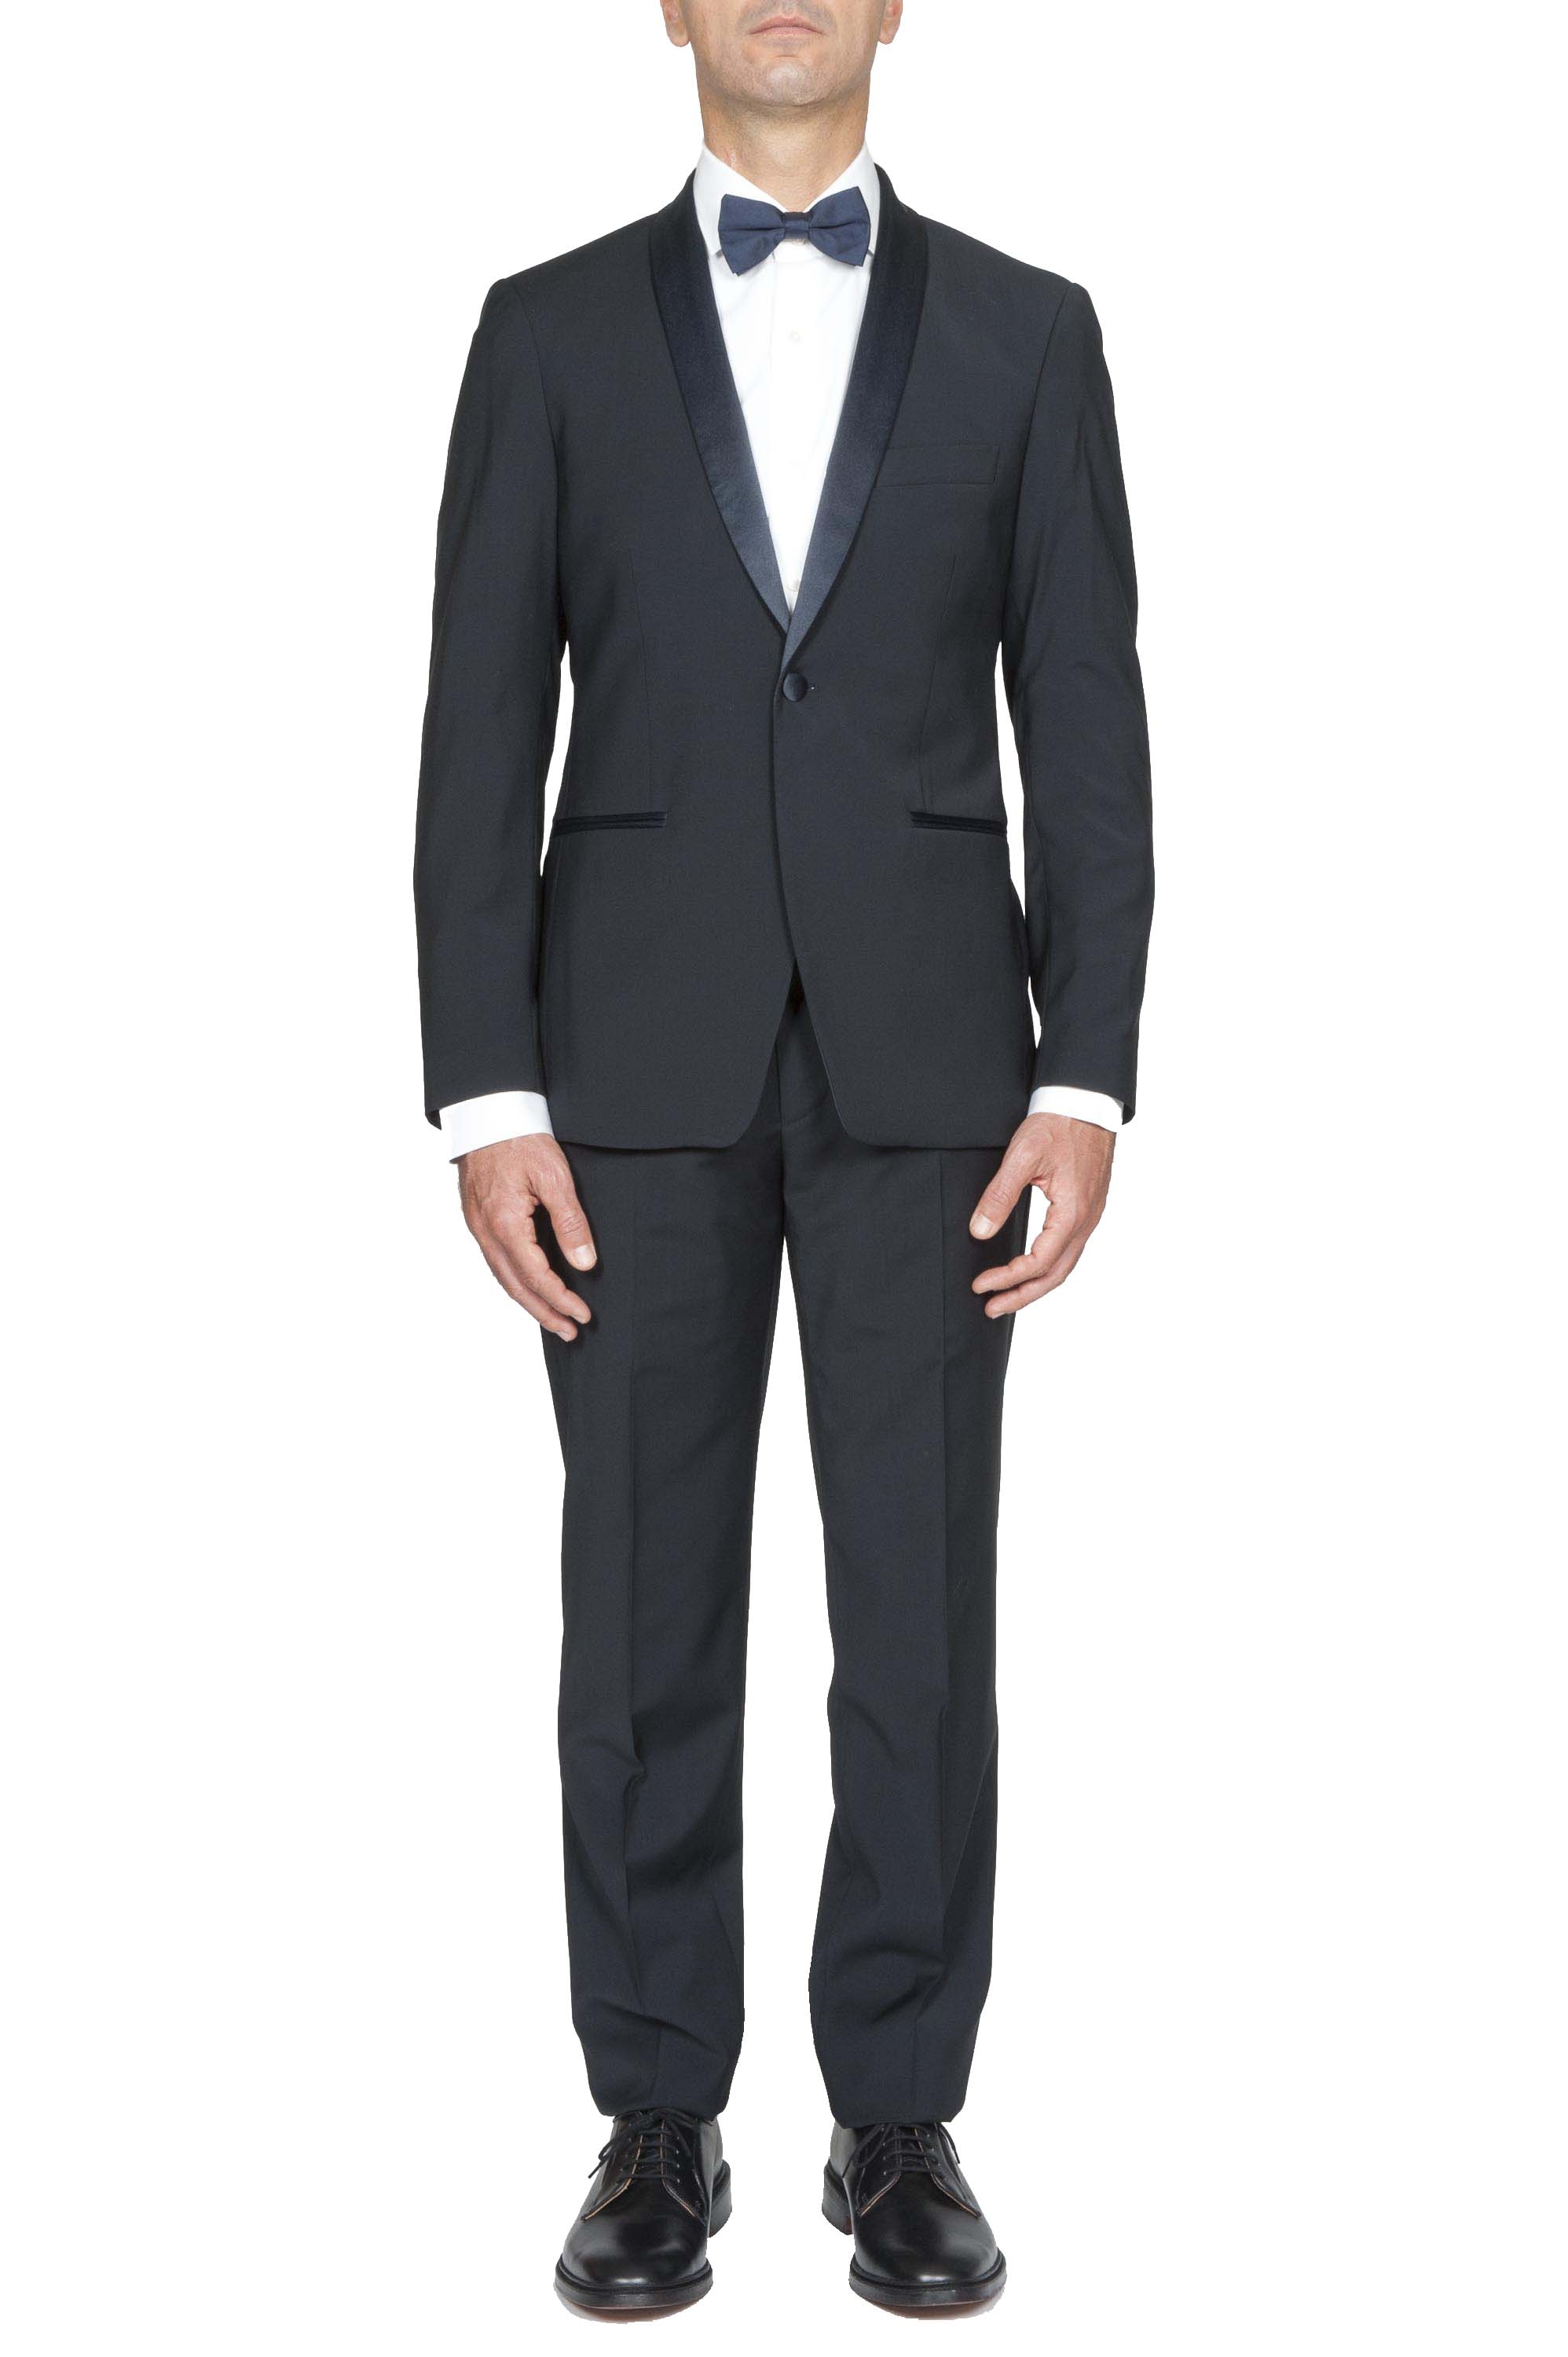 SBU 01061 Two piece tuxedo suit 01